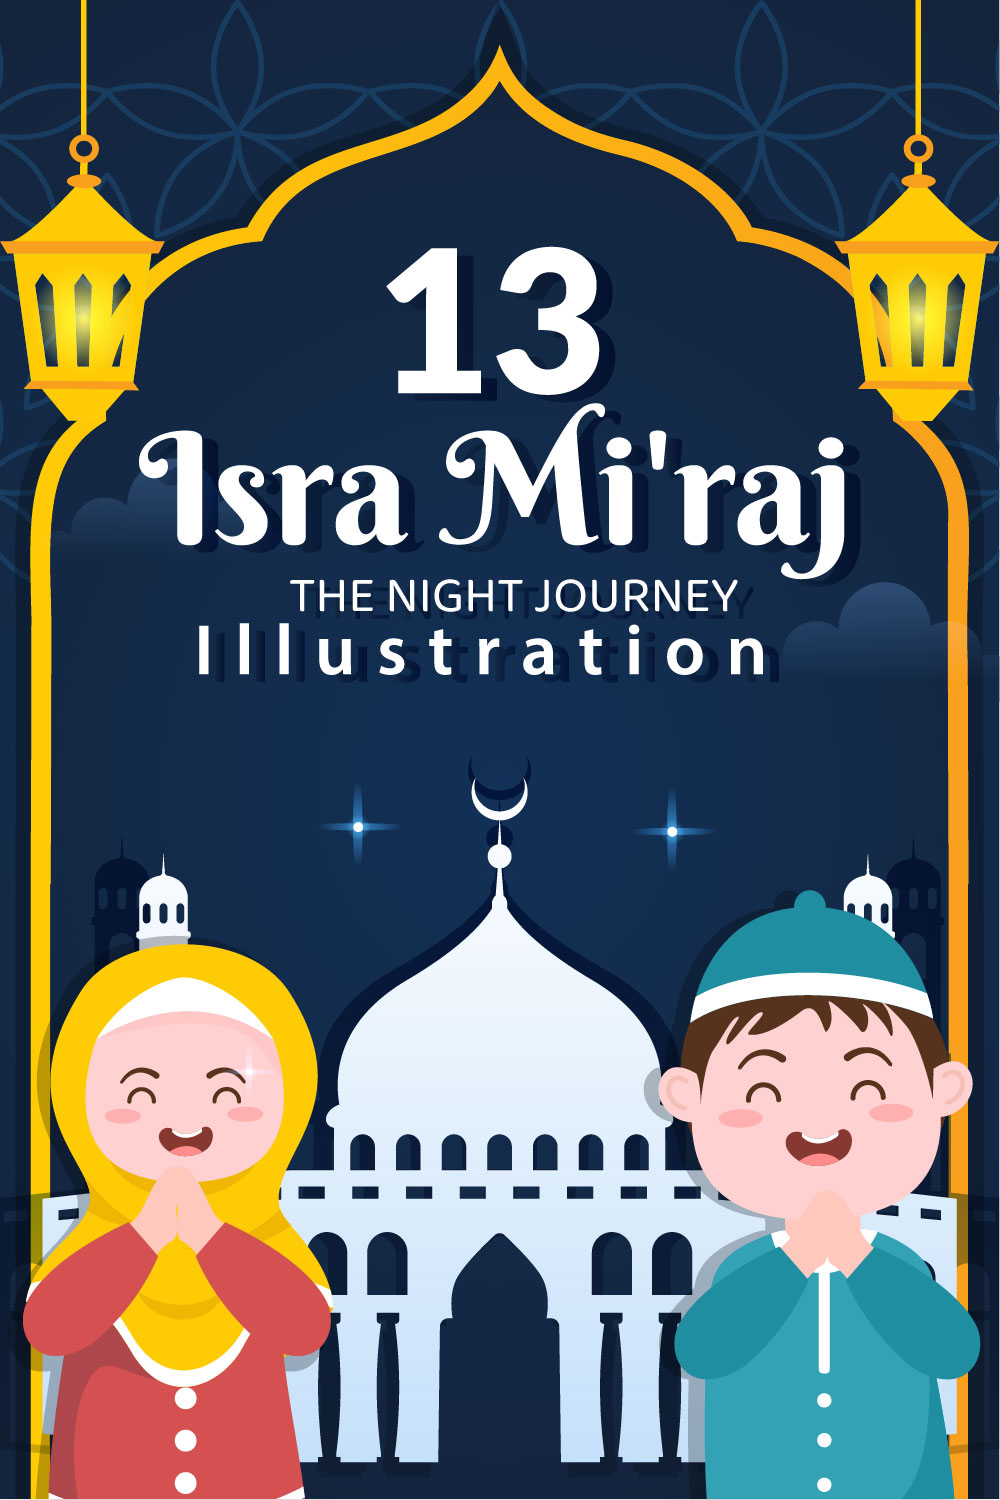 13 Happy Isra Miraj Illustration pinterest image.